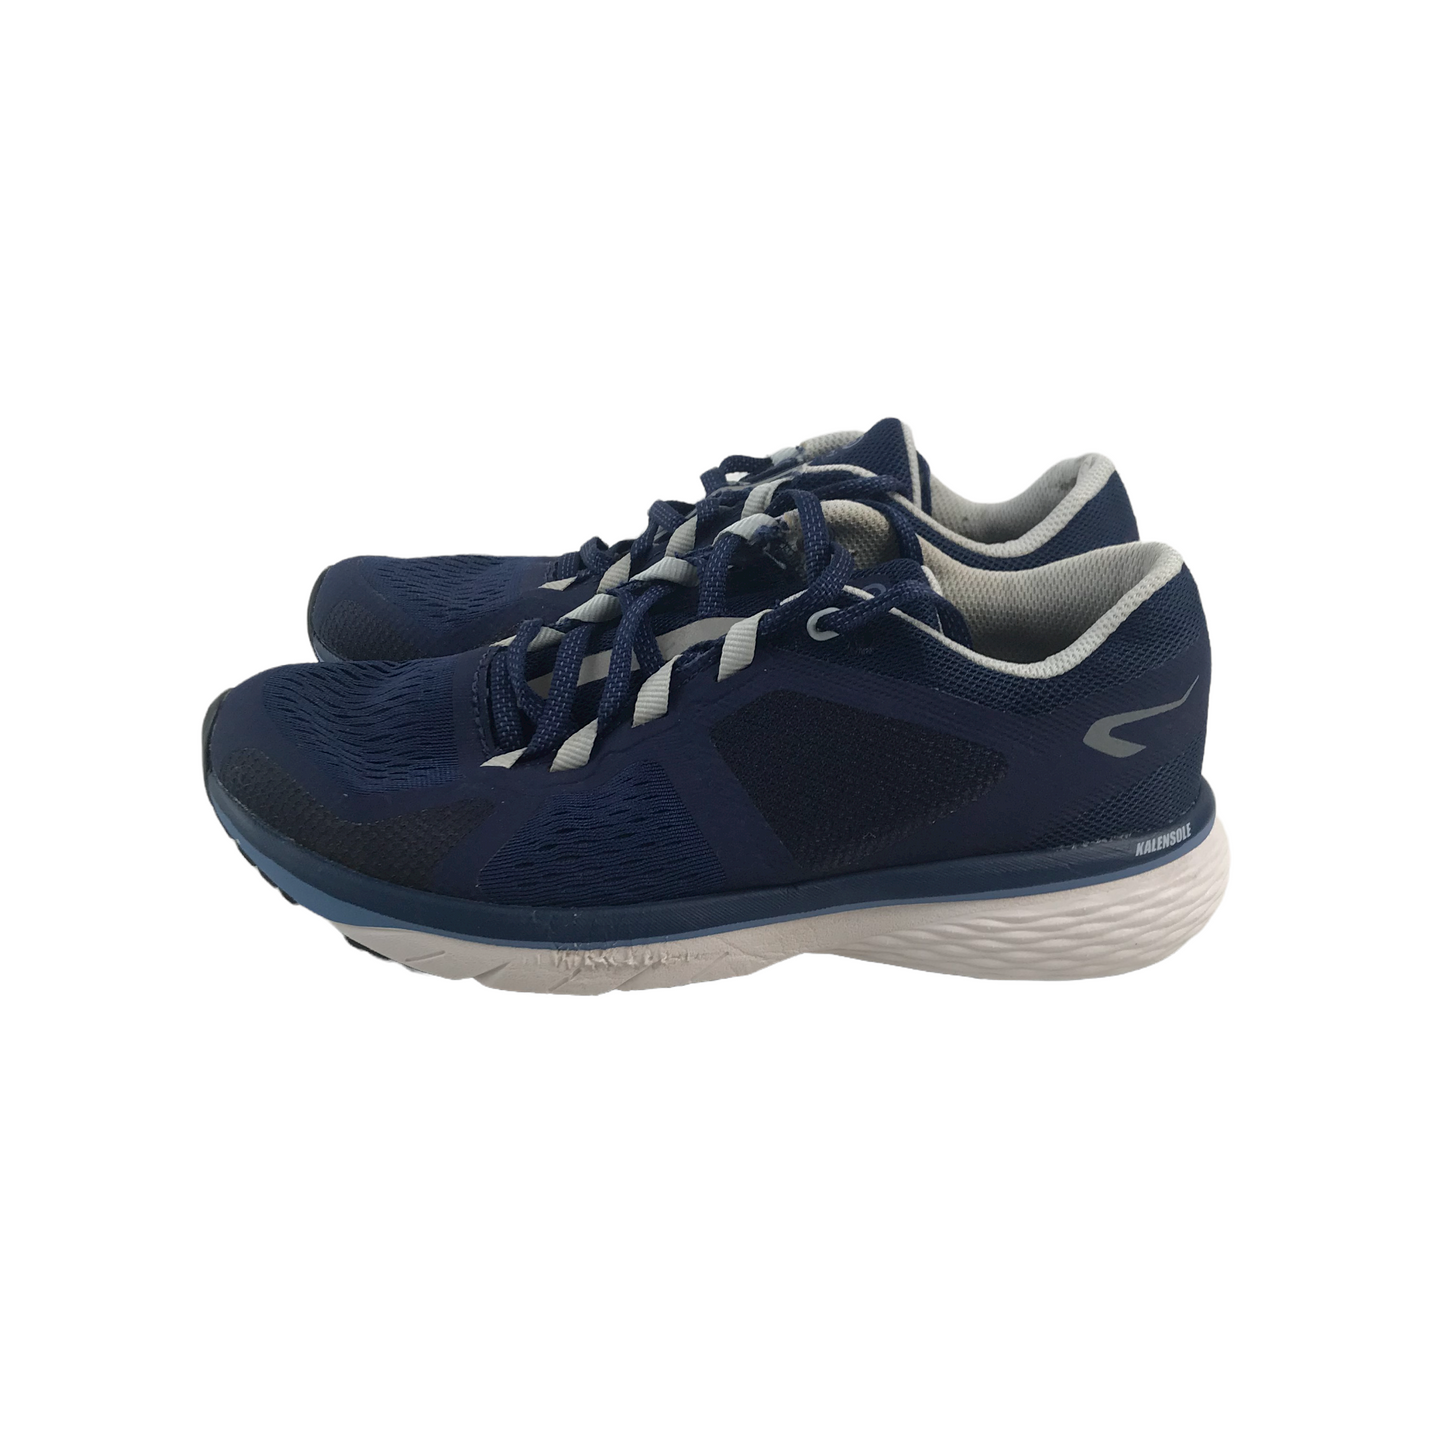 Kalenji Navy Blue Trainers Shoe Size 5.5